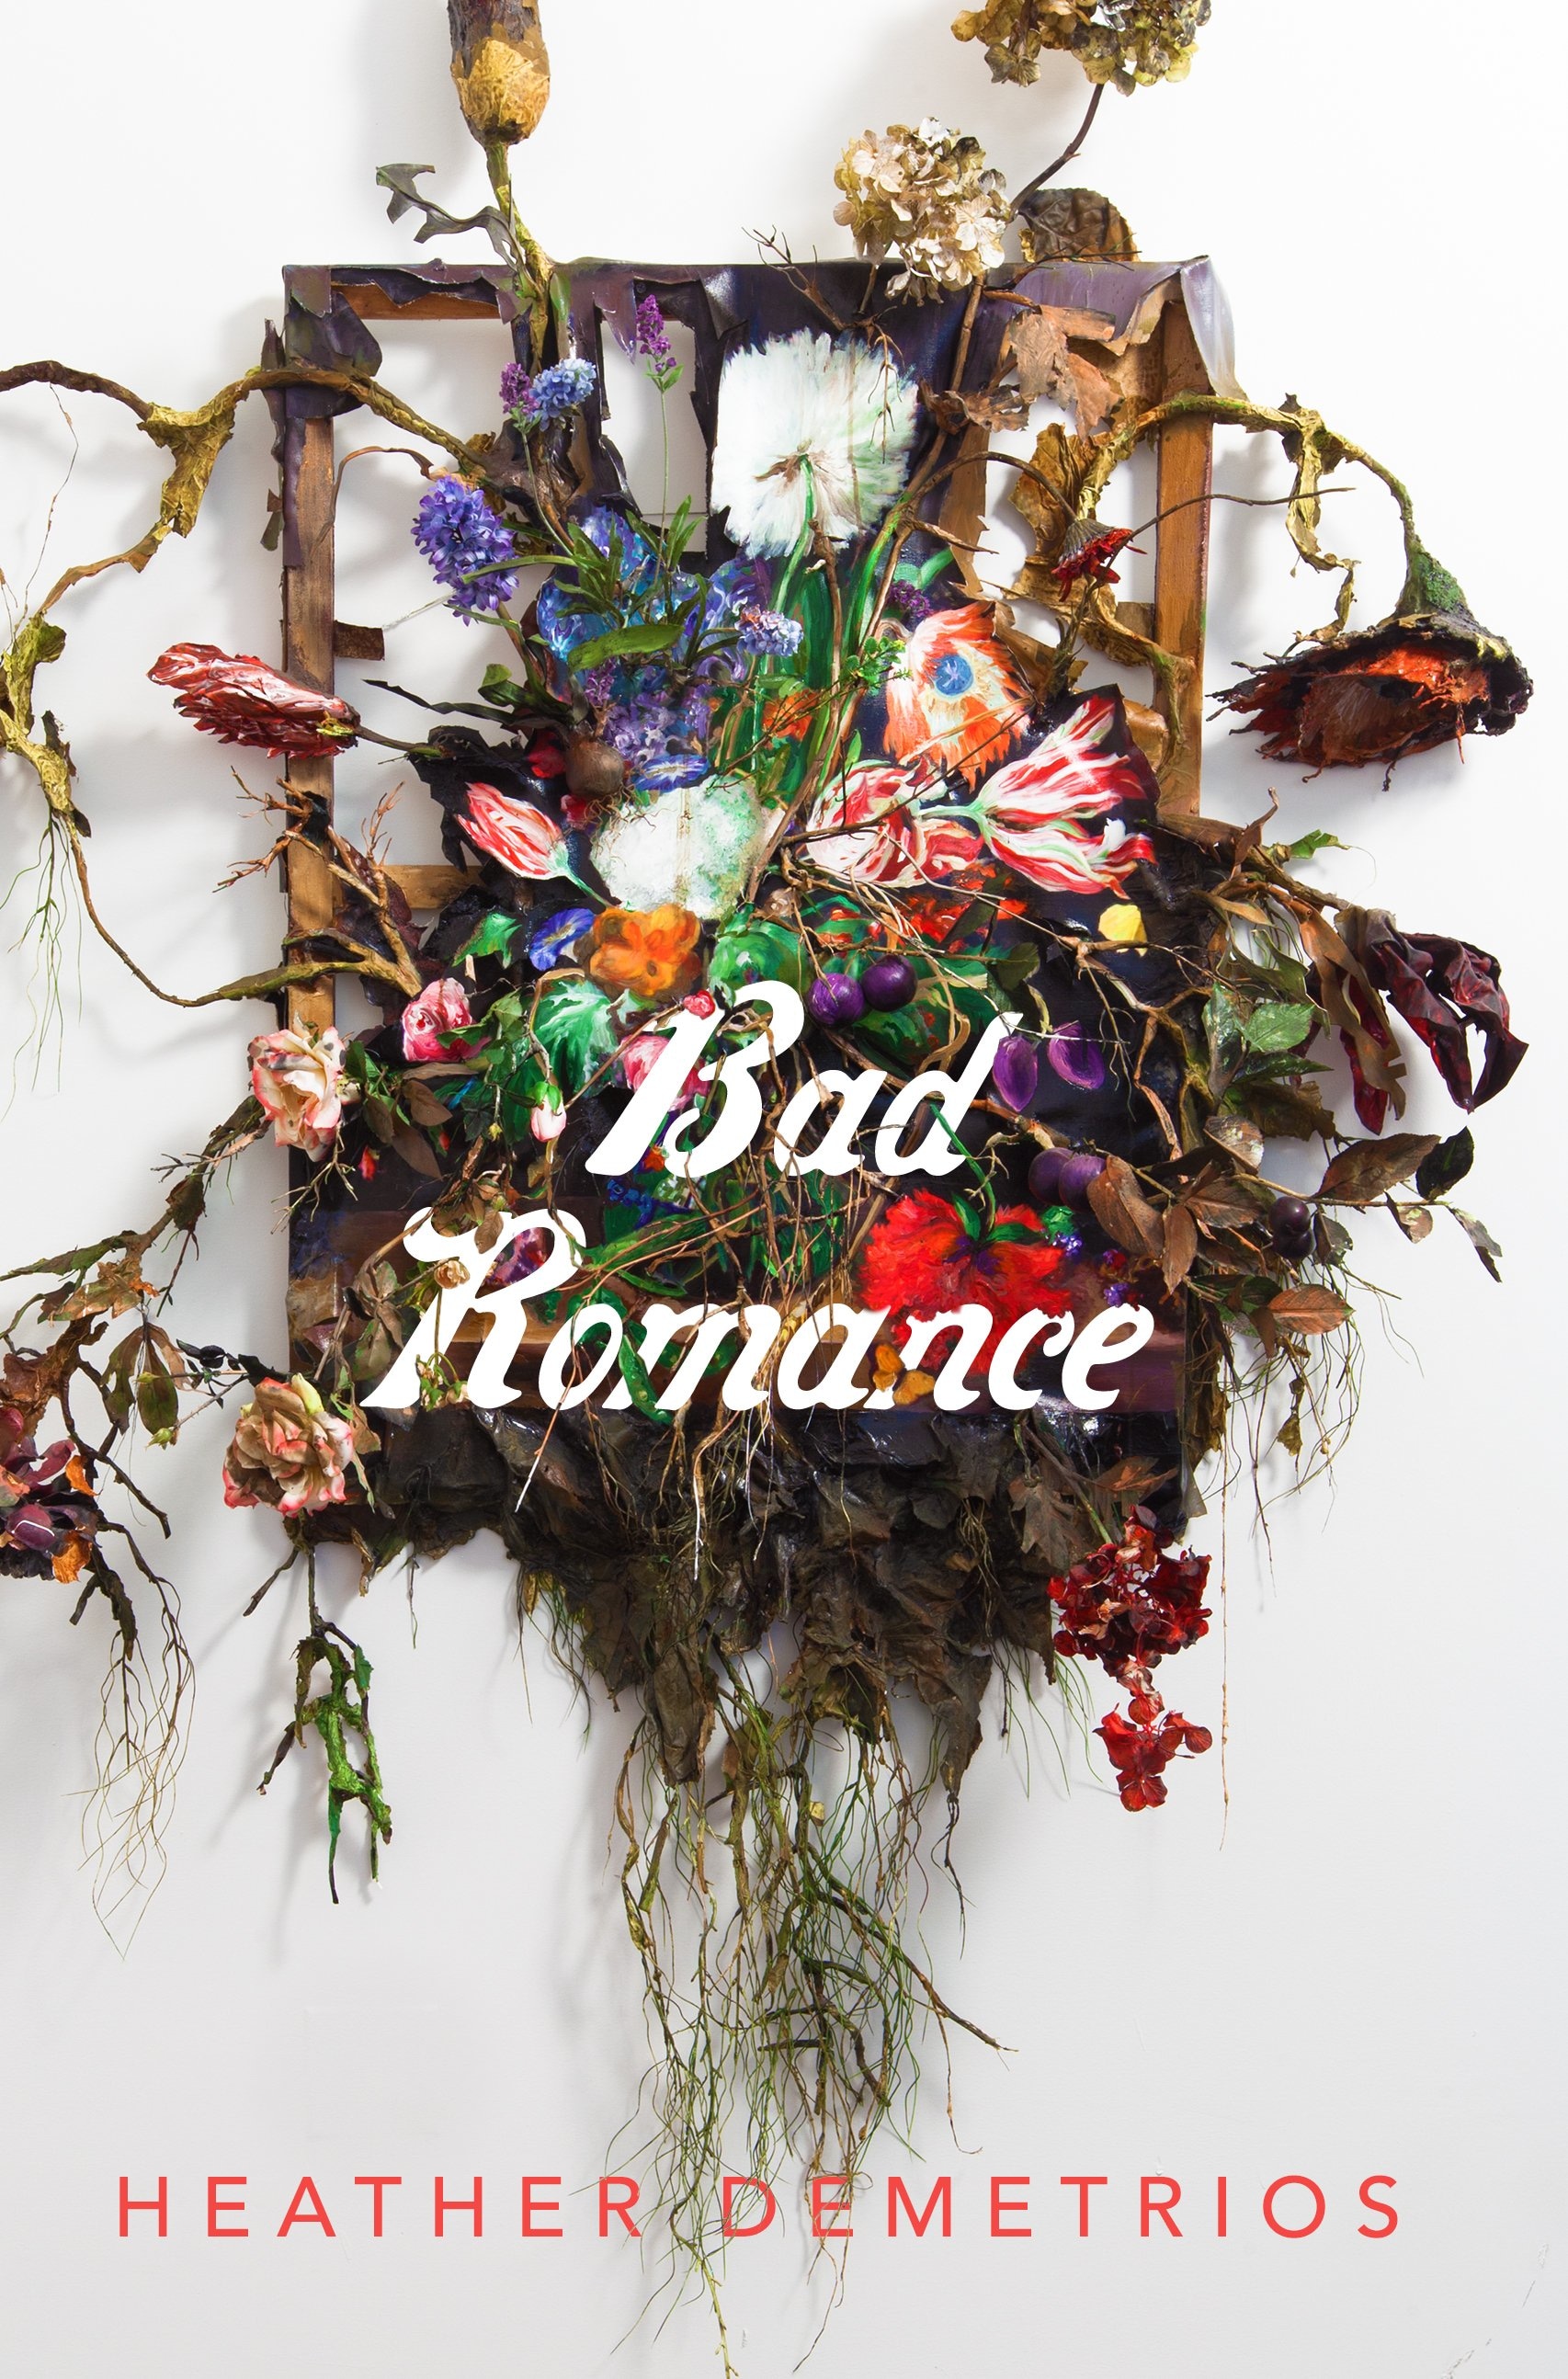 Book “Bad Romance” by Heather Demetrios — June 13, 2017